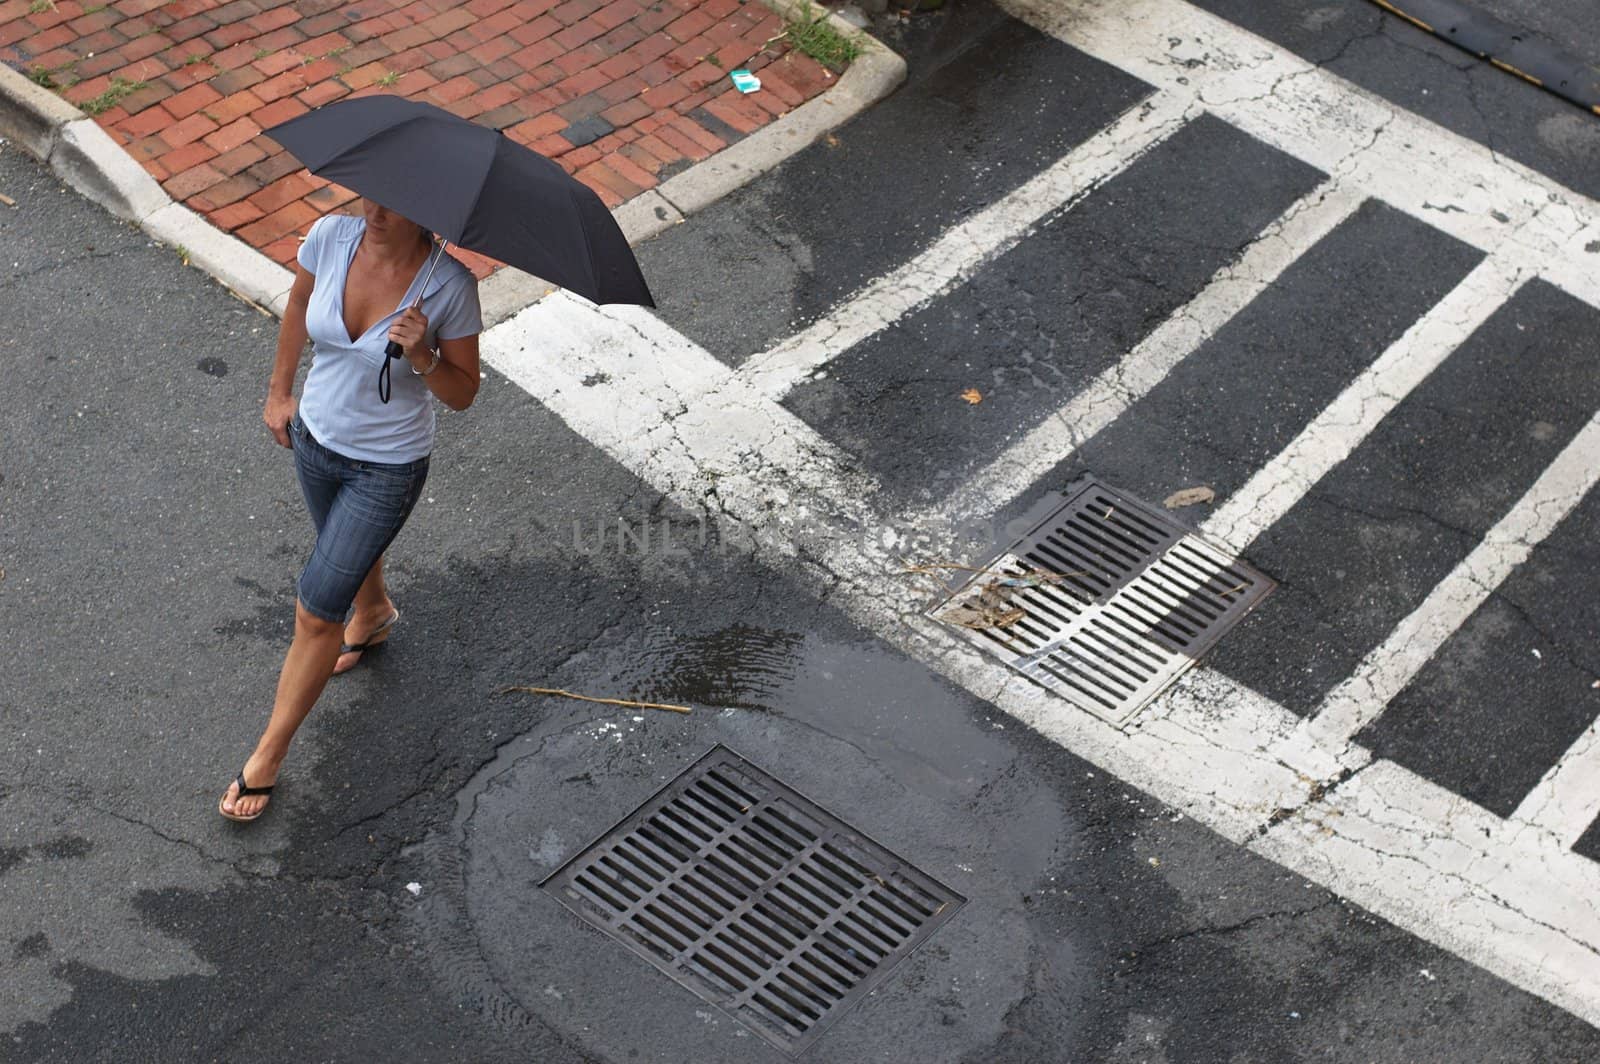 Woman walking in street with umbrella.